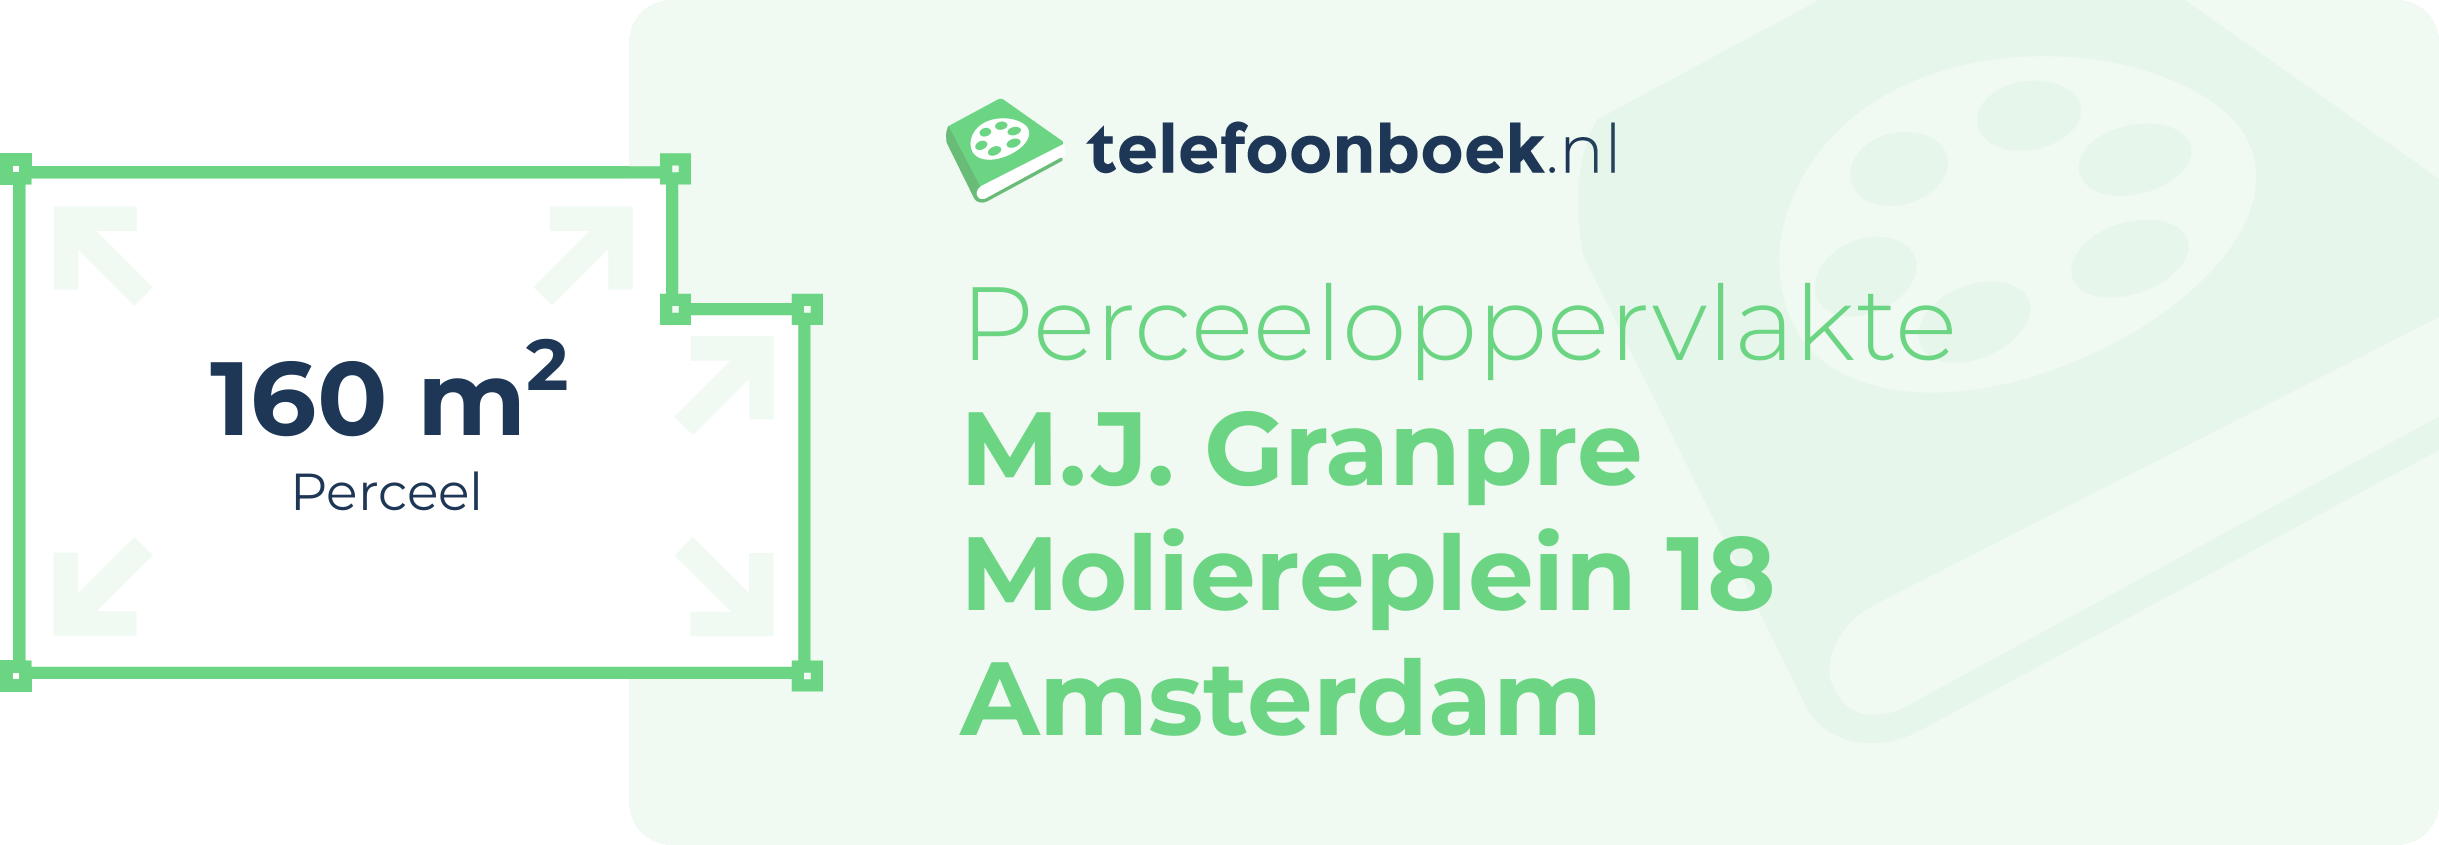 Perceeloppervlakte M.J. Granpre Moliereplein 18 Amsterdam